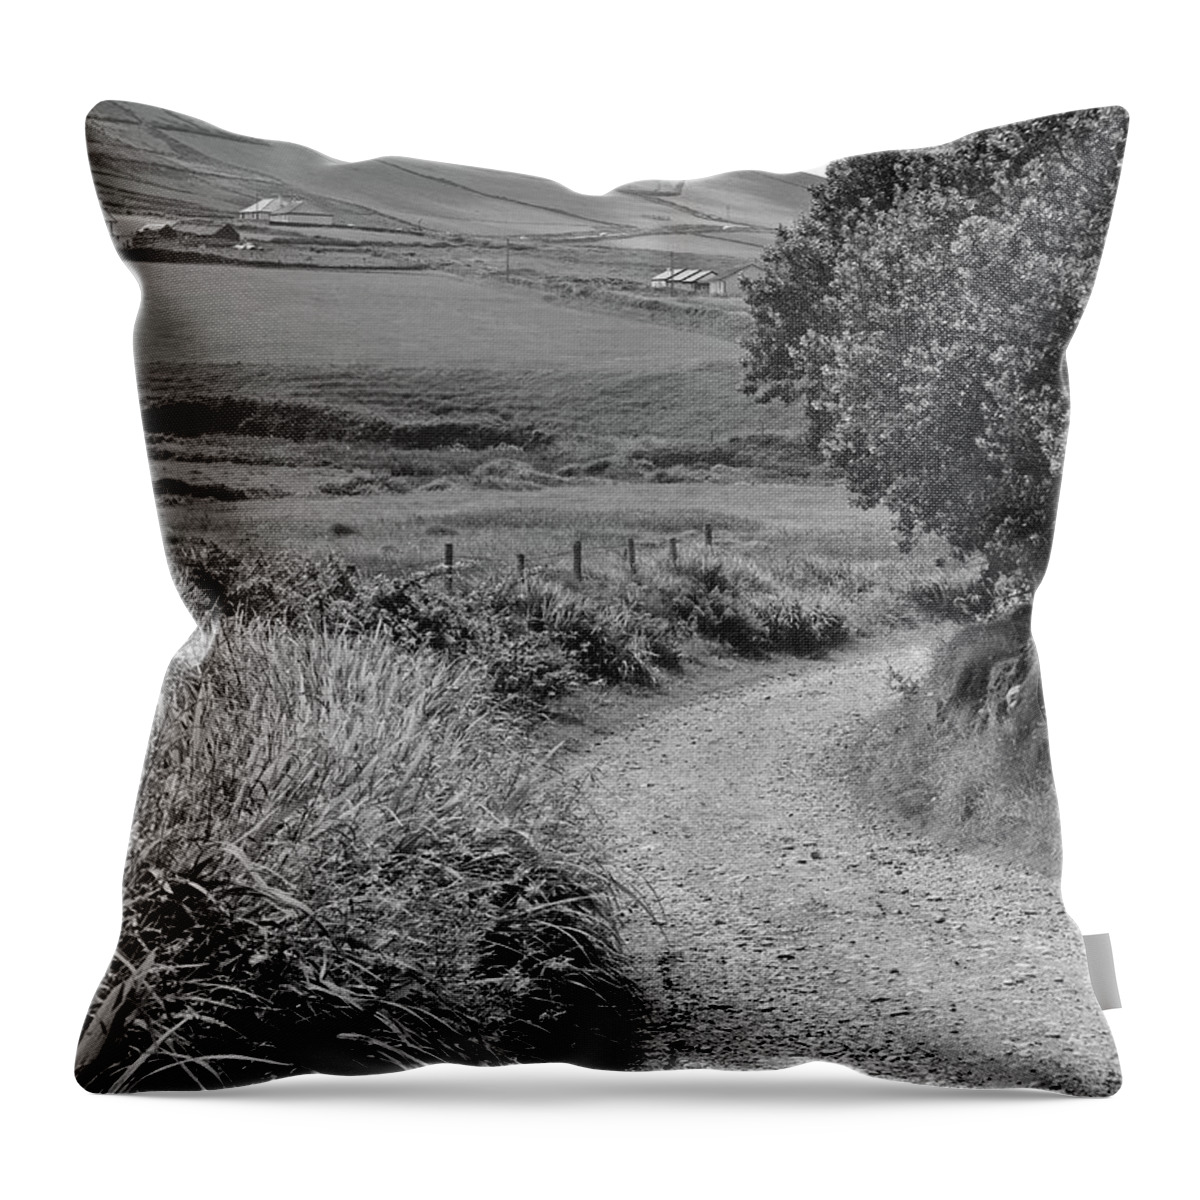 Ireland Throw Pillow featuring the photograph Country Lane by Matt MacMillan